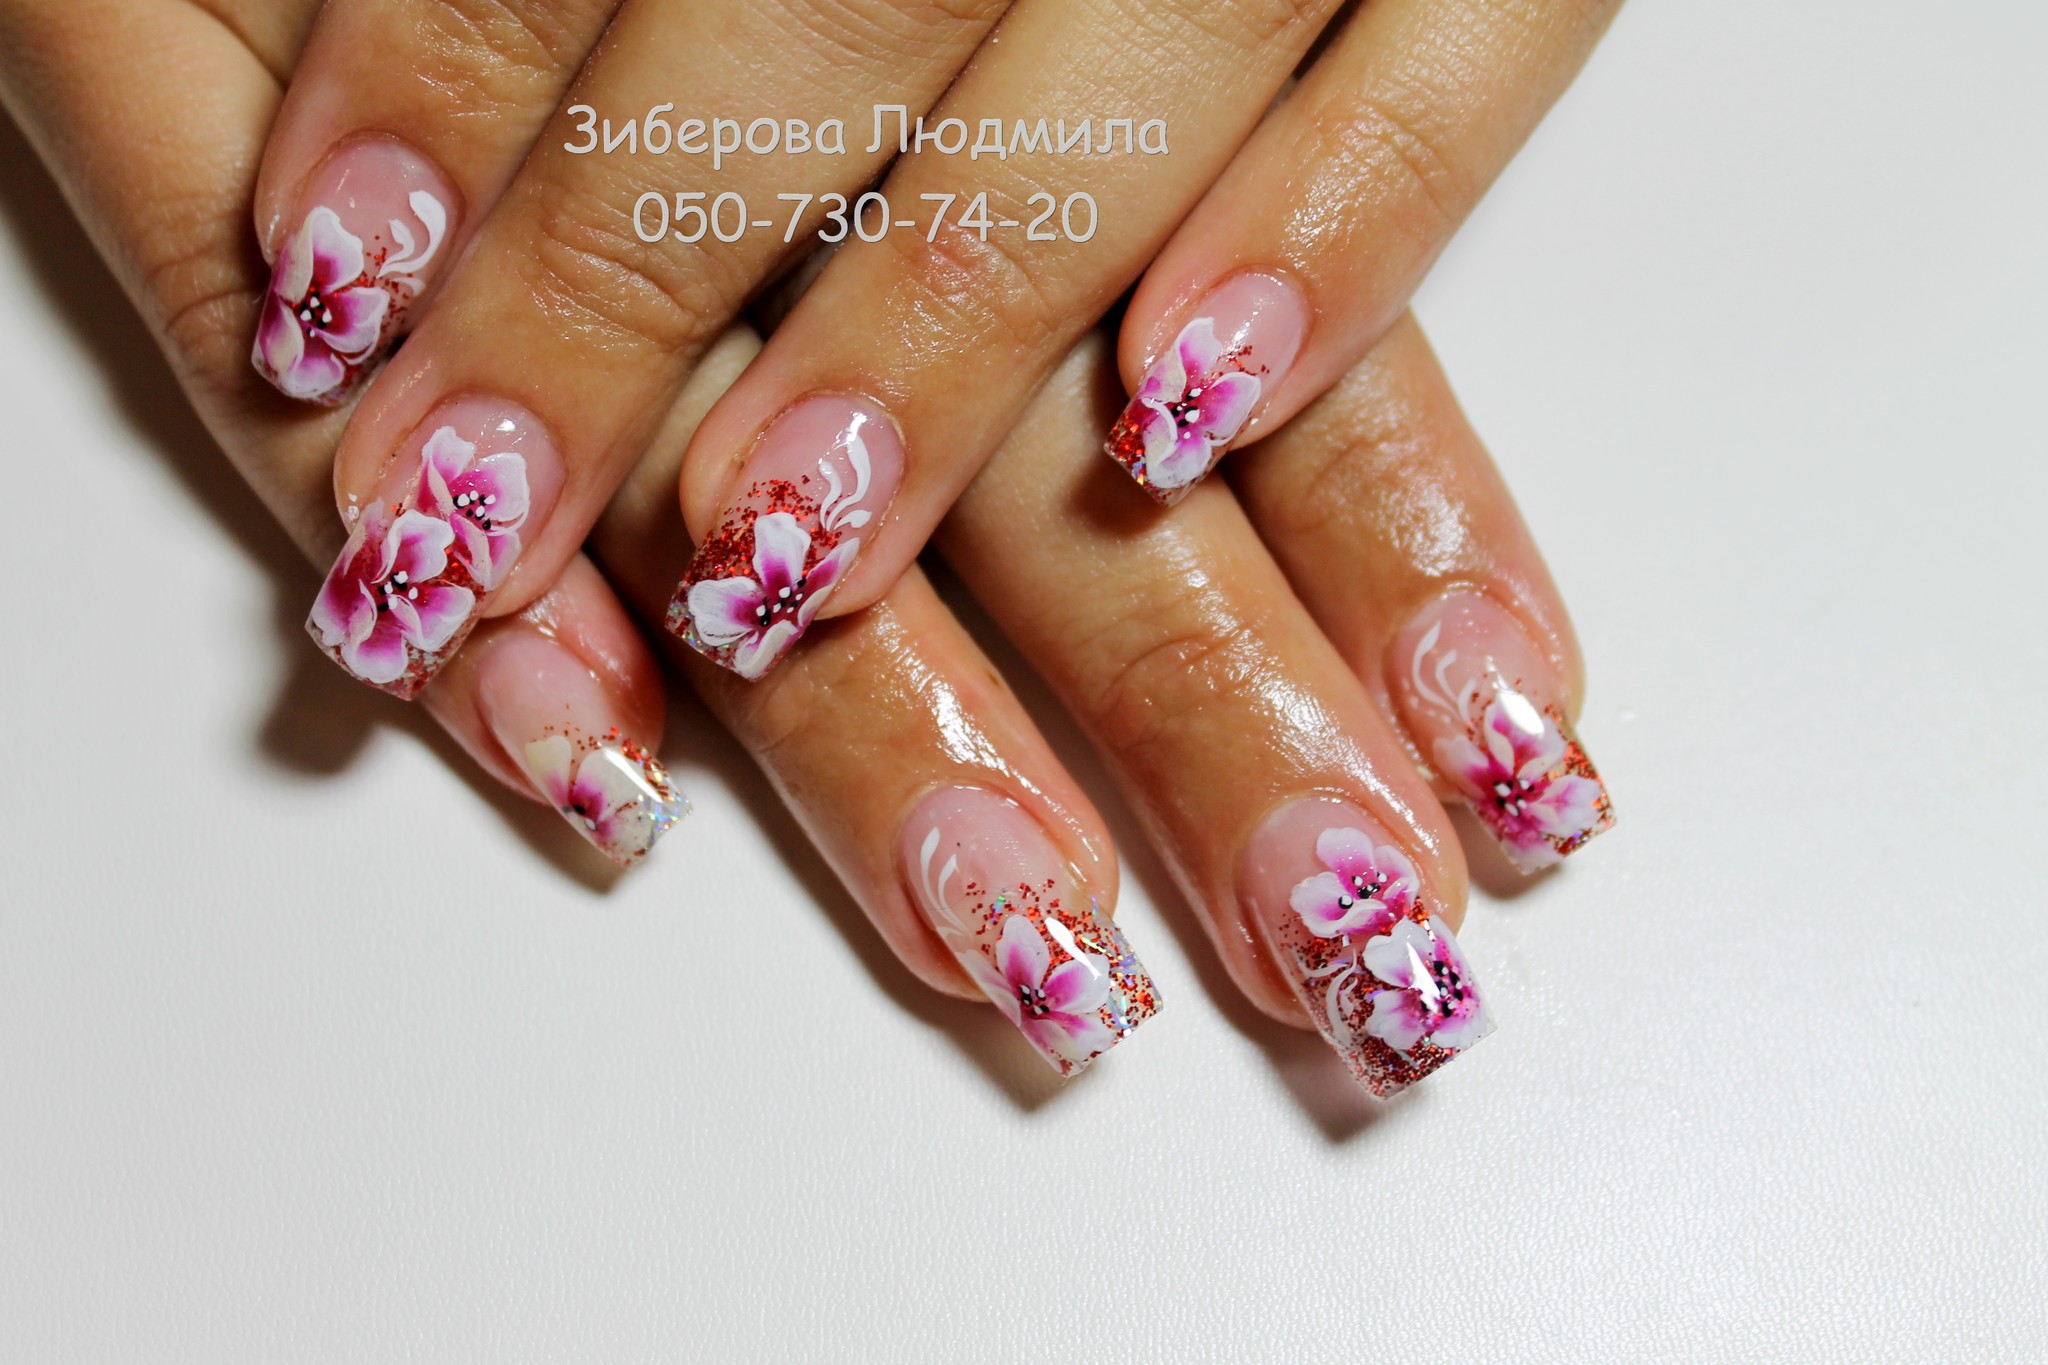 Ногти френч с цветами Сакуры